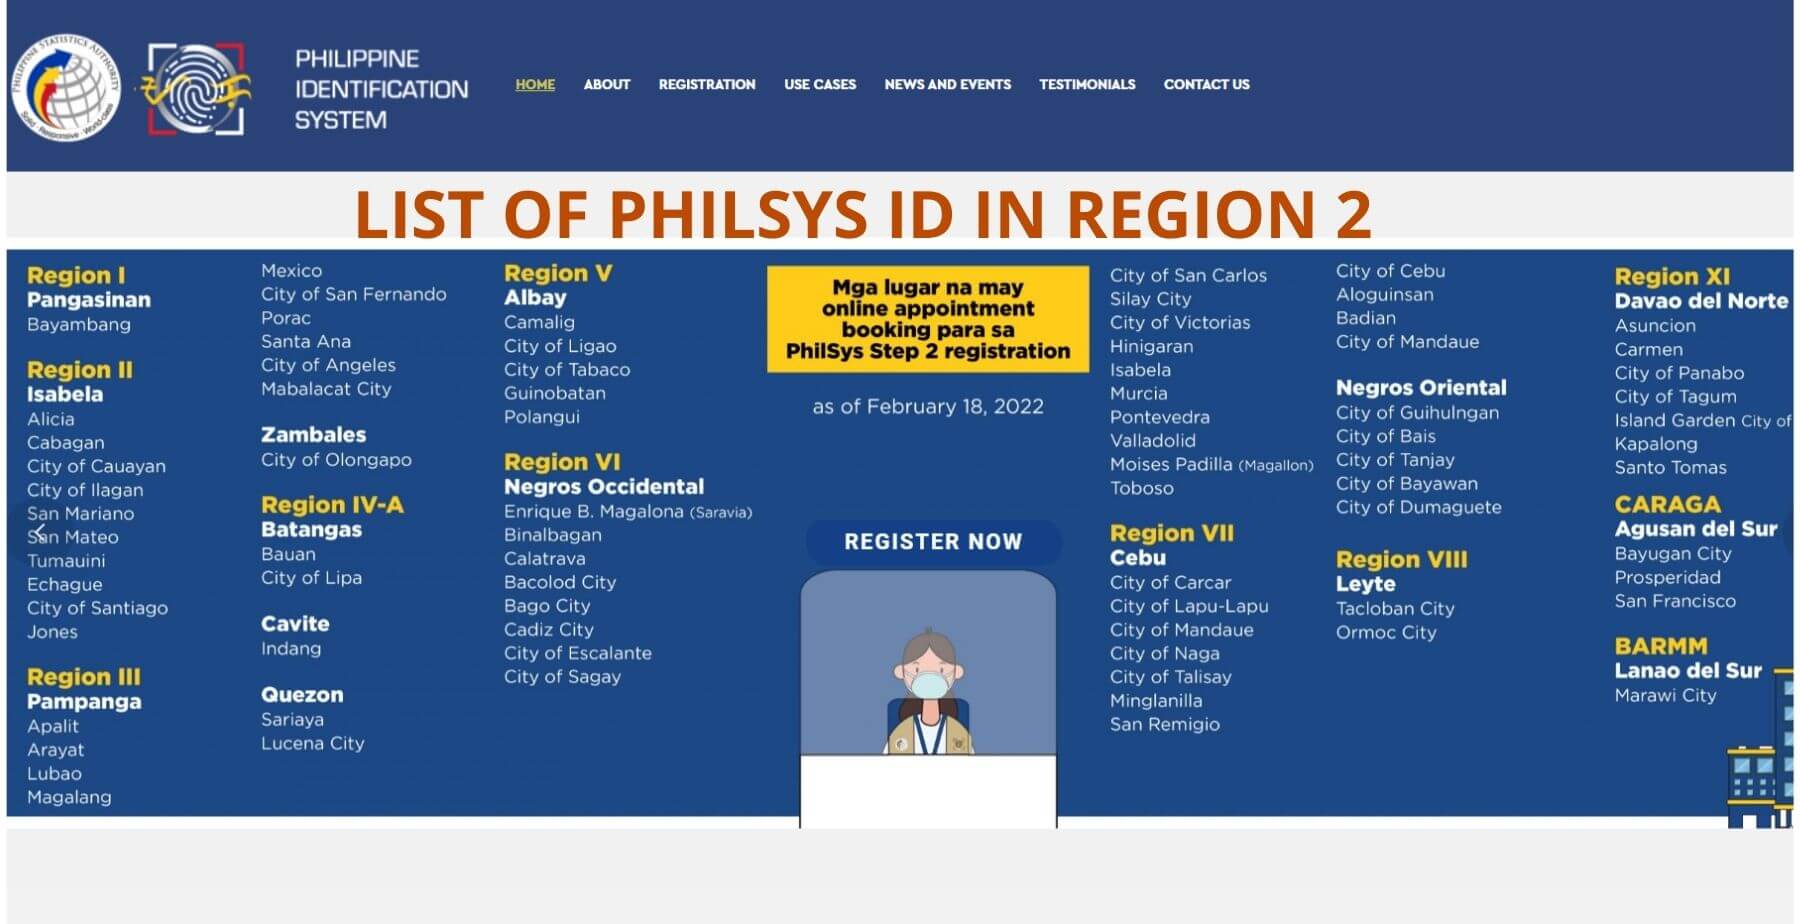 LIST OF PHILSYS ID IN REGION 2